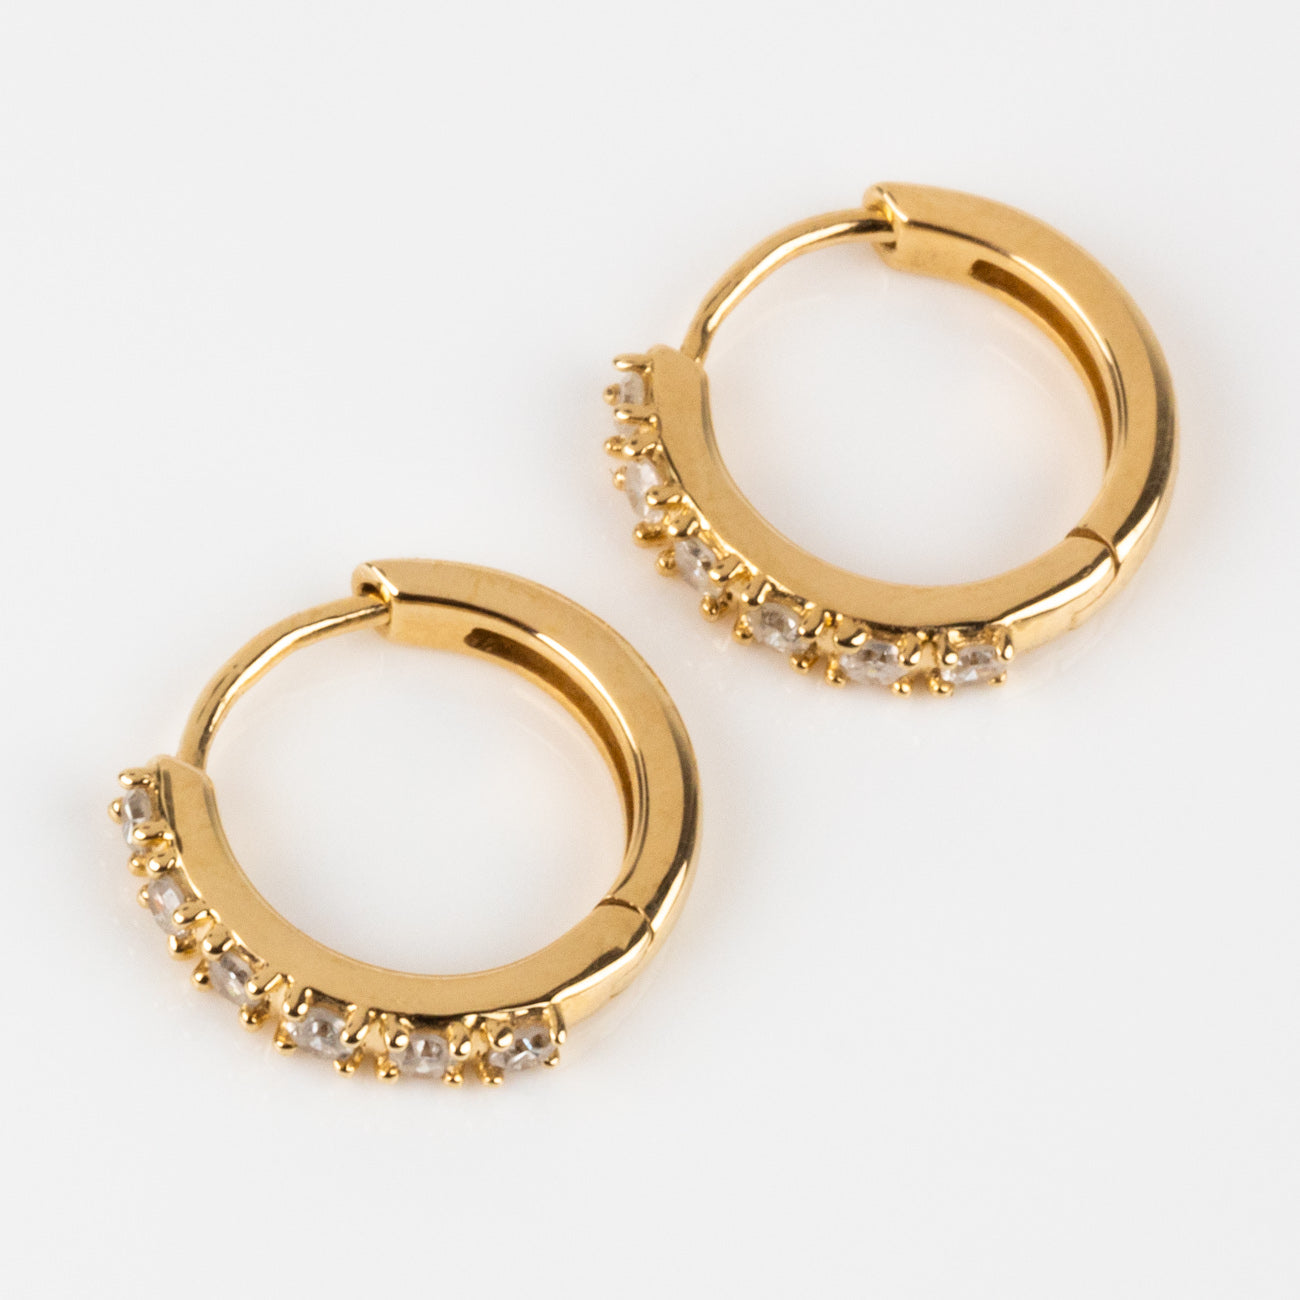 Buy NANDANA COLLECTIONS Mens Golden Rings Earrings Alloy Hoop Earring at  Amazon.in